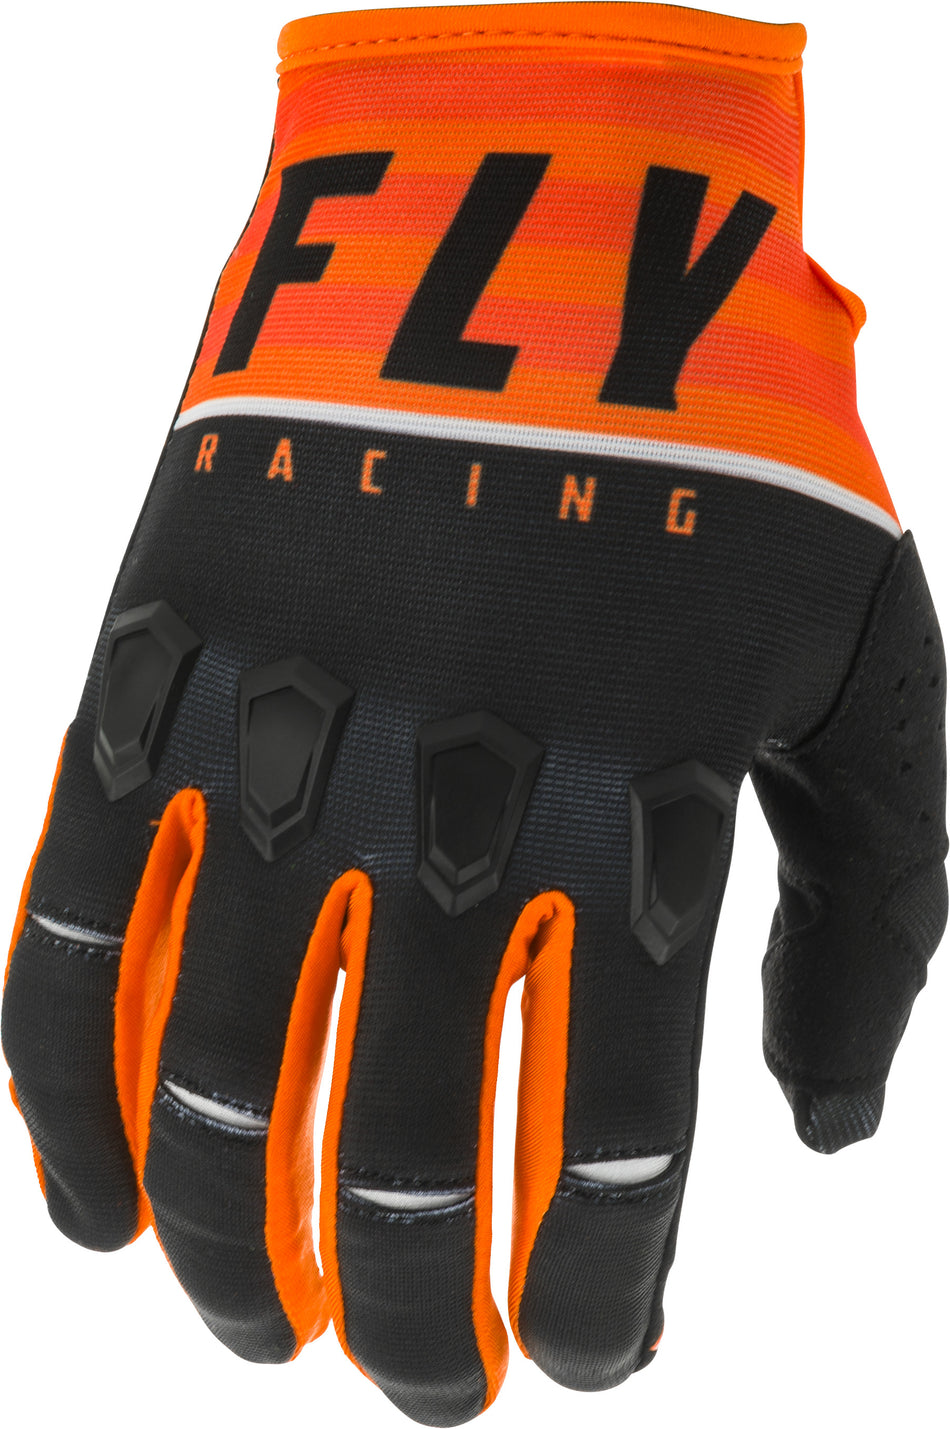 FLY RACING Kinetic K120 Gloves Orange/Black/White Sz 11 373-41711